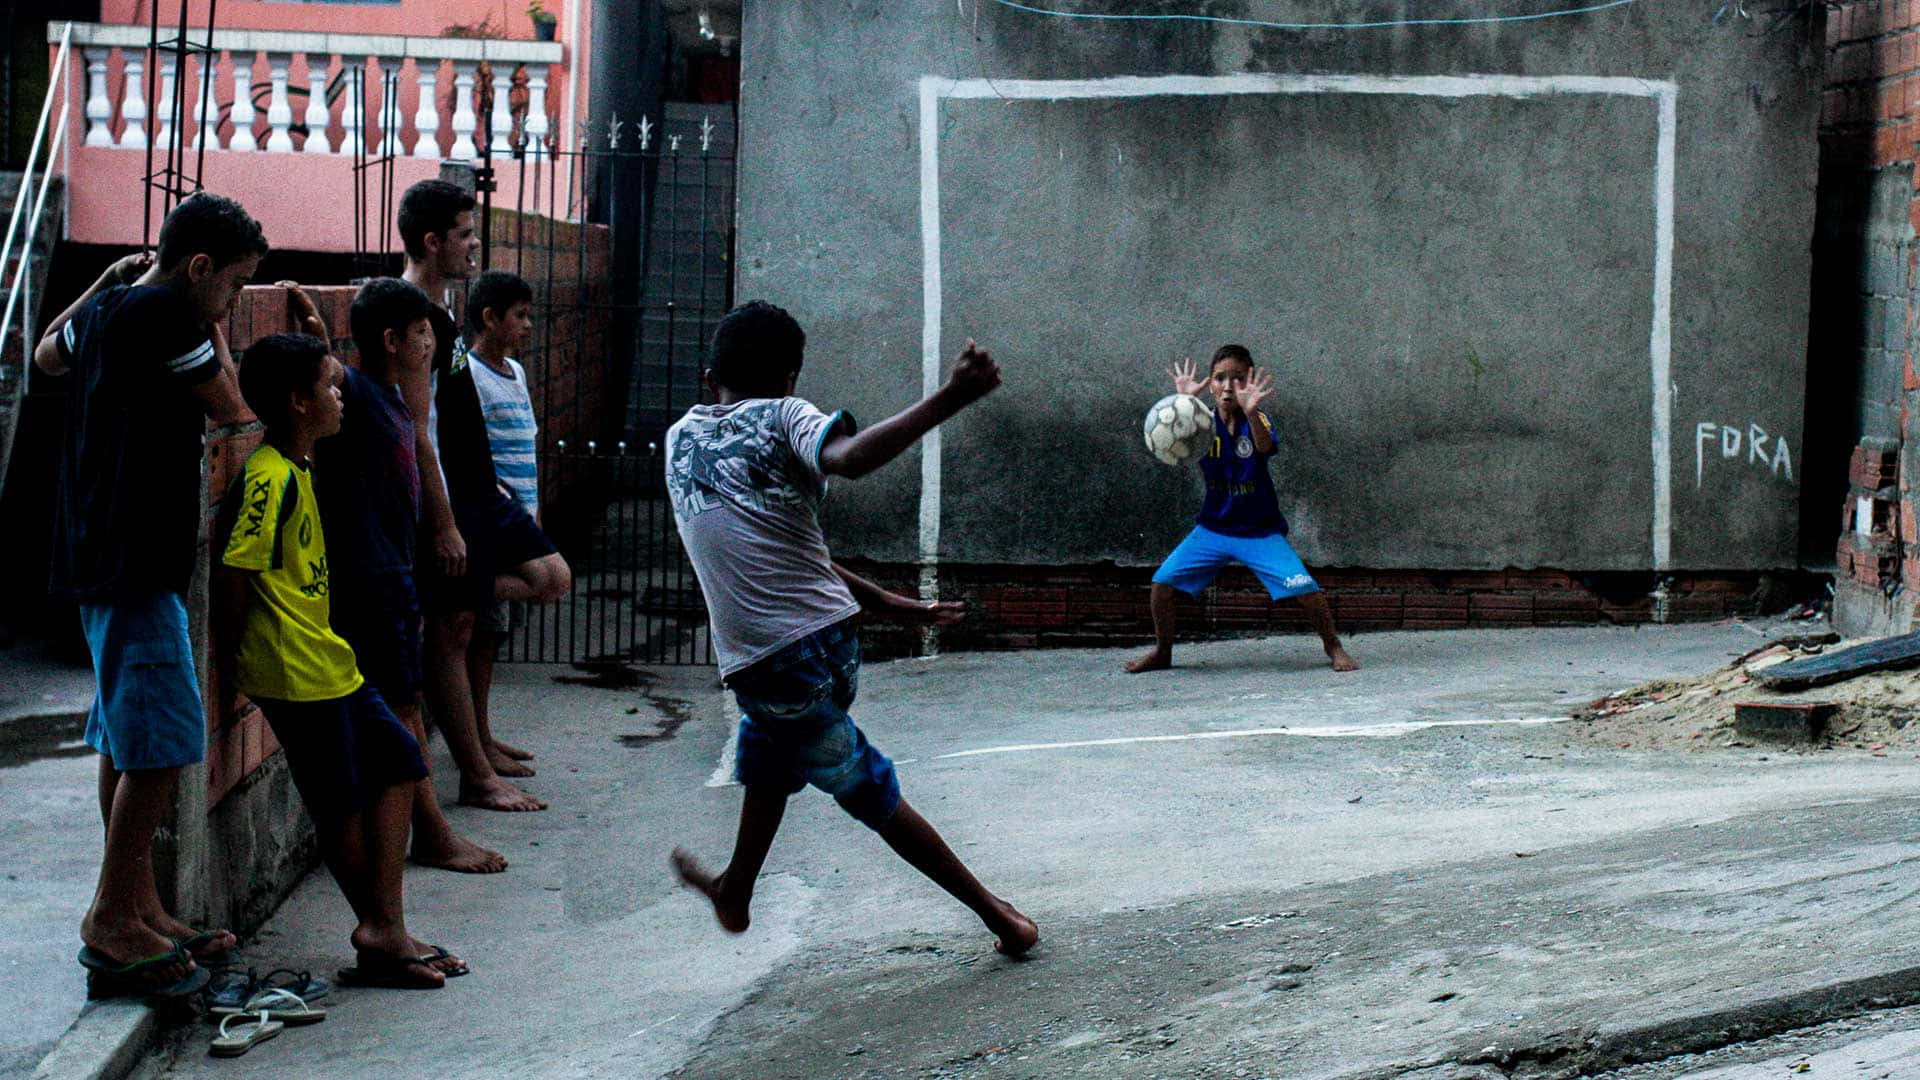 Street Soccer Gamein Action.jpg Wallpaper